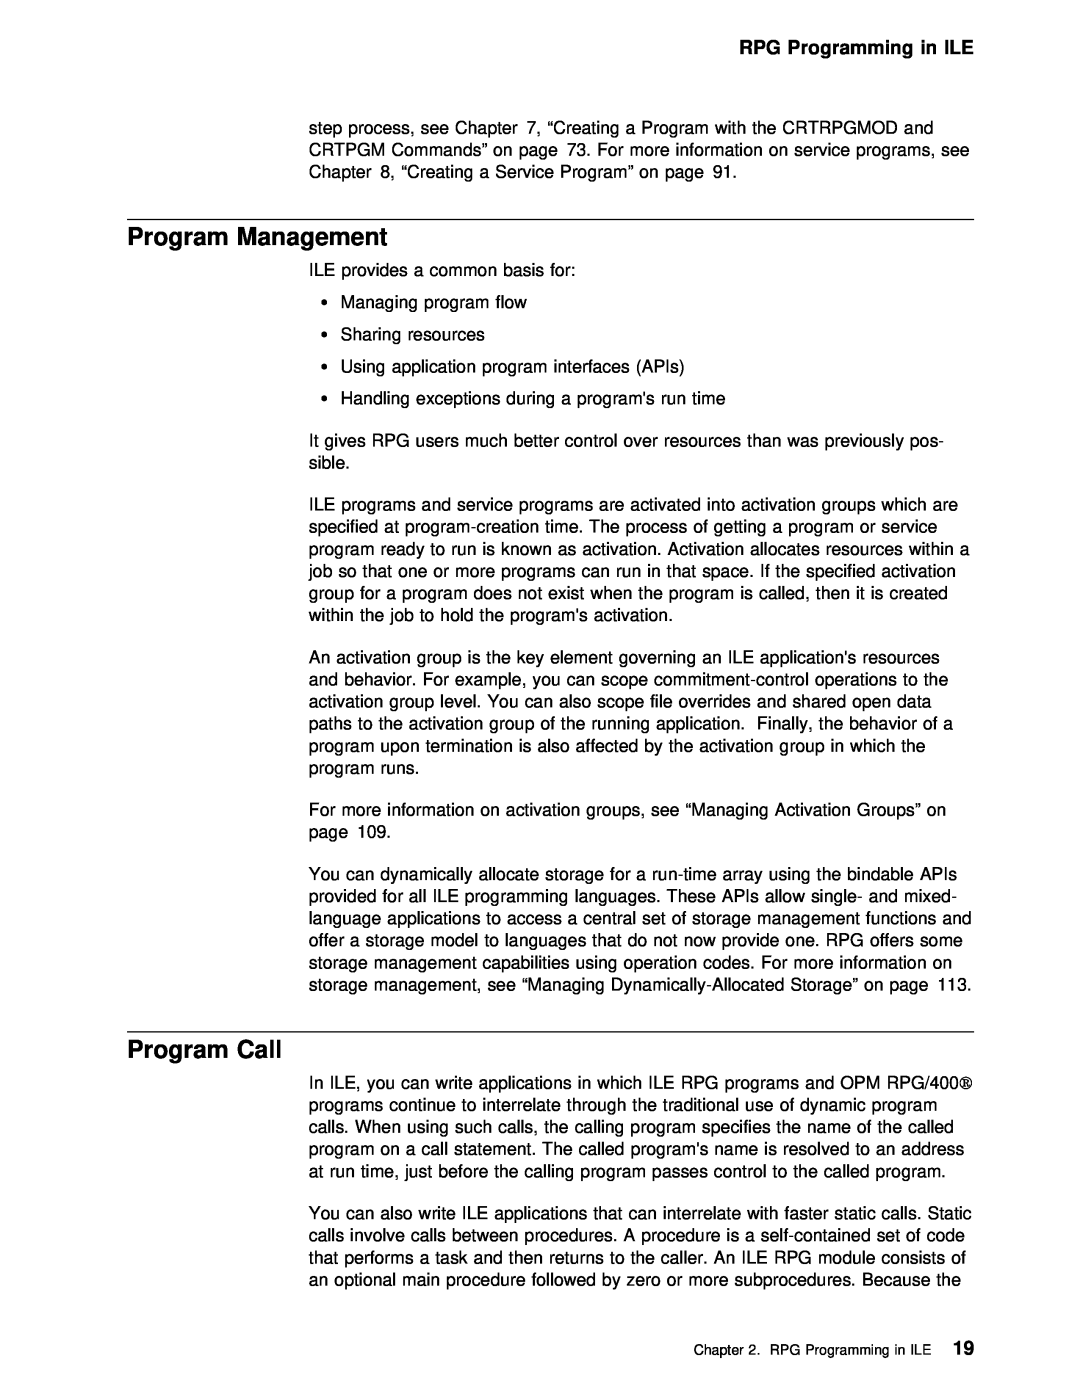 IBM AS/400 manual Program Management, Program Call, in ILE 